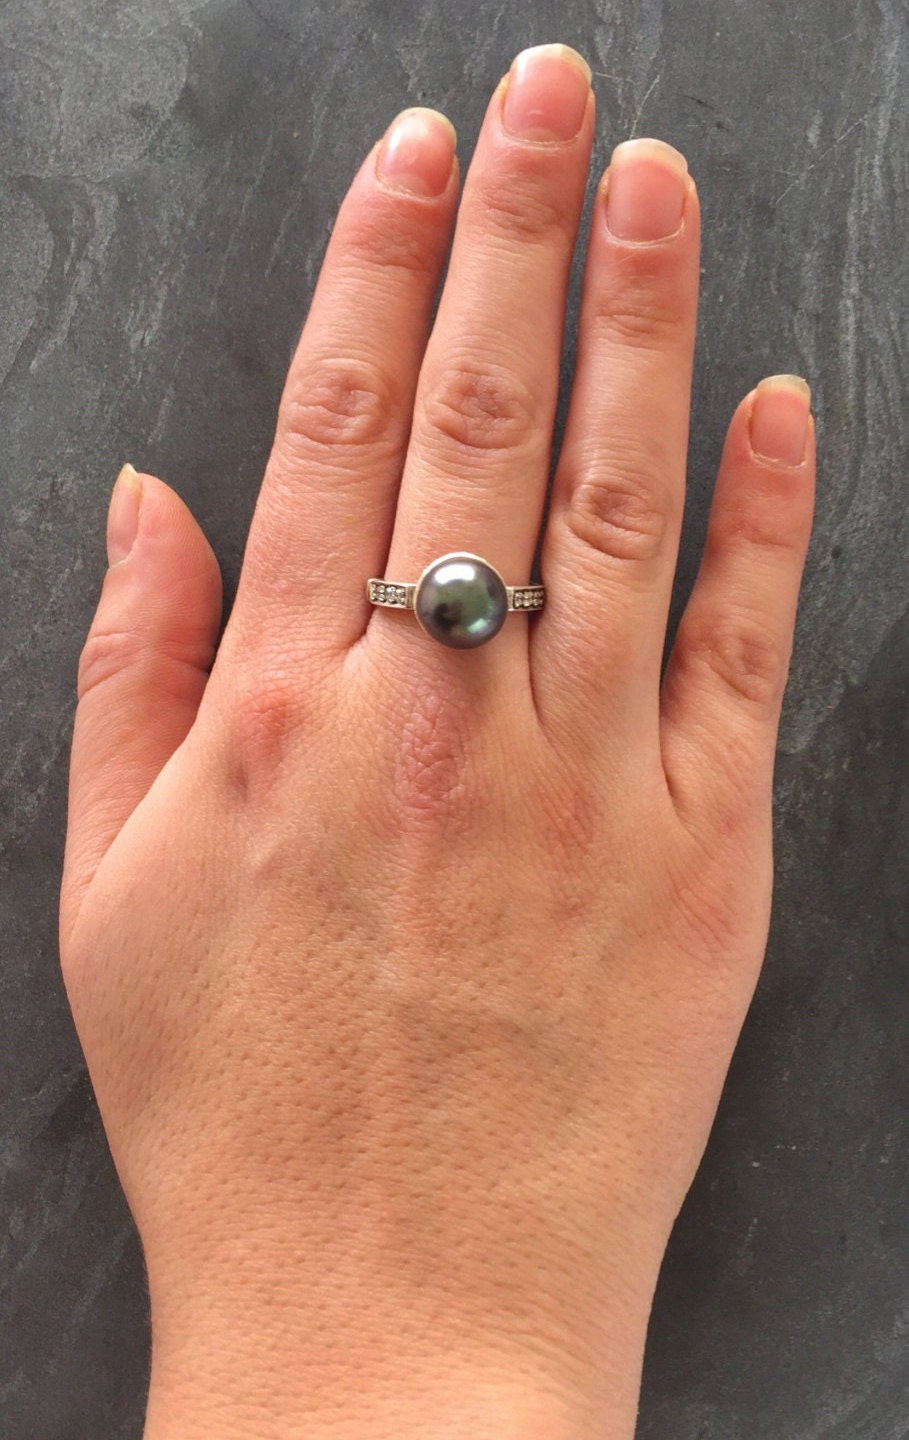 Buy Hdbg Mukta Moti Pearl Moti Stone Original Certified सफ़ेद सच्चे मोती  रत्न की अंगूठी Beautiful & Pure White Gold Rose Gold Chandi Ring For Men &  Women पर्ल स्टोन रिंग Freshwater